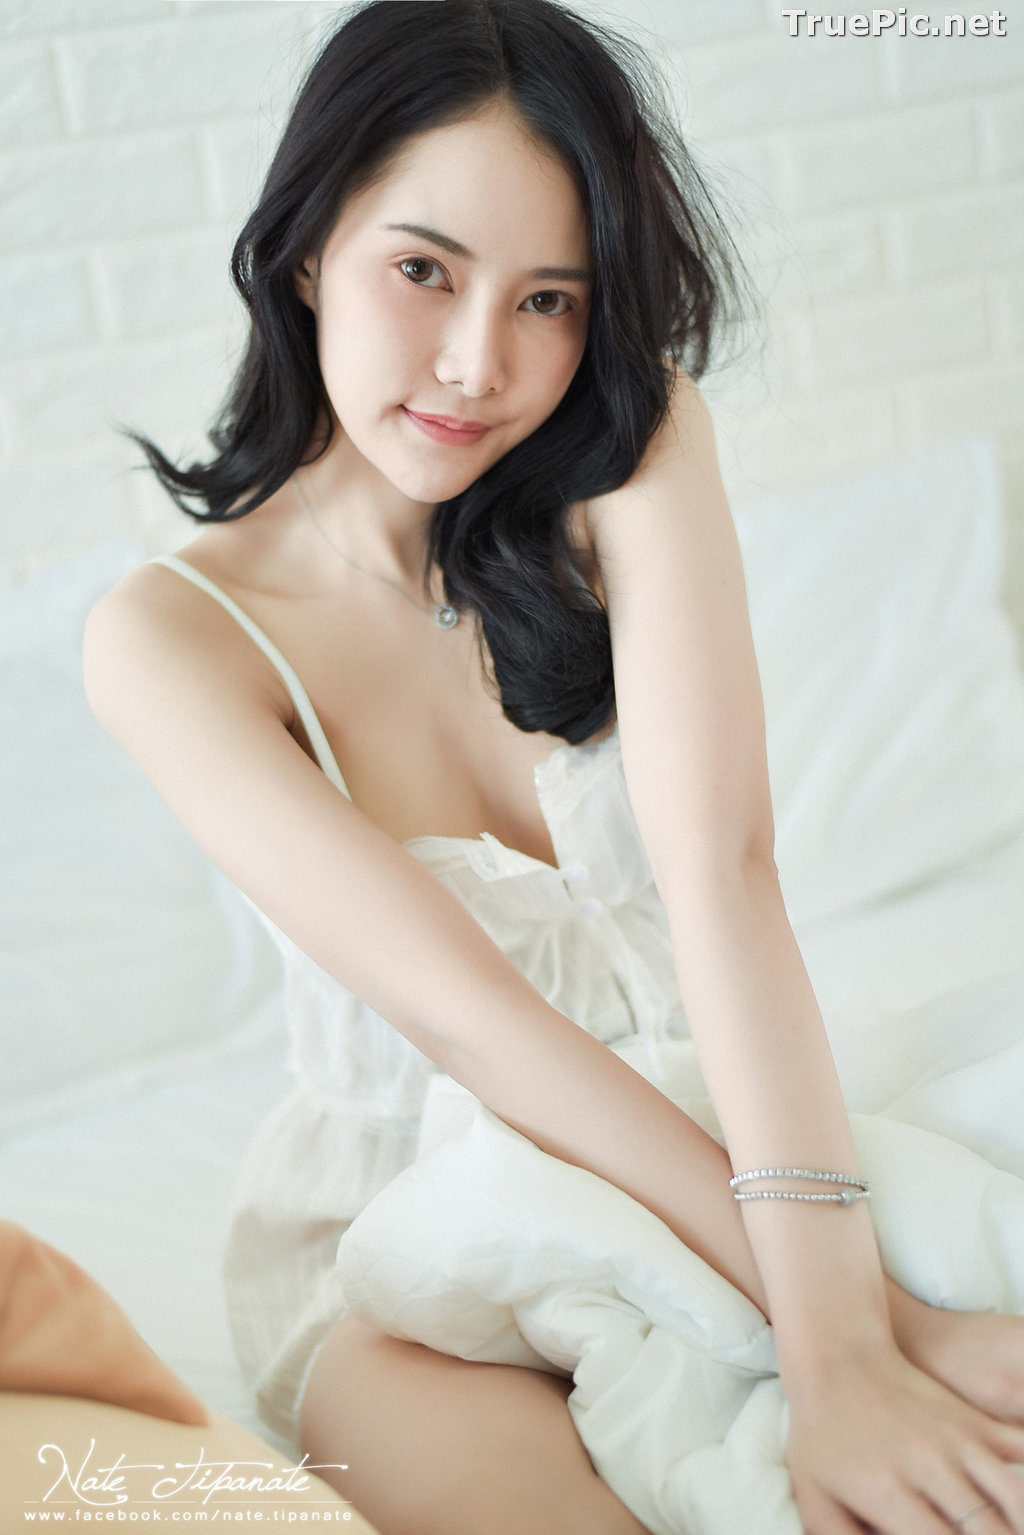 Image Thailand Model - Nattanicha Pw - Beautiful In White Sleepwear - TruePic.net - Picture-7